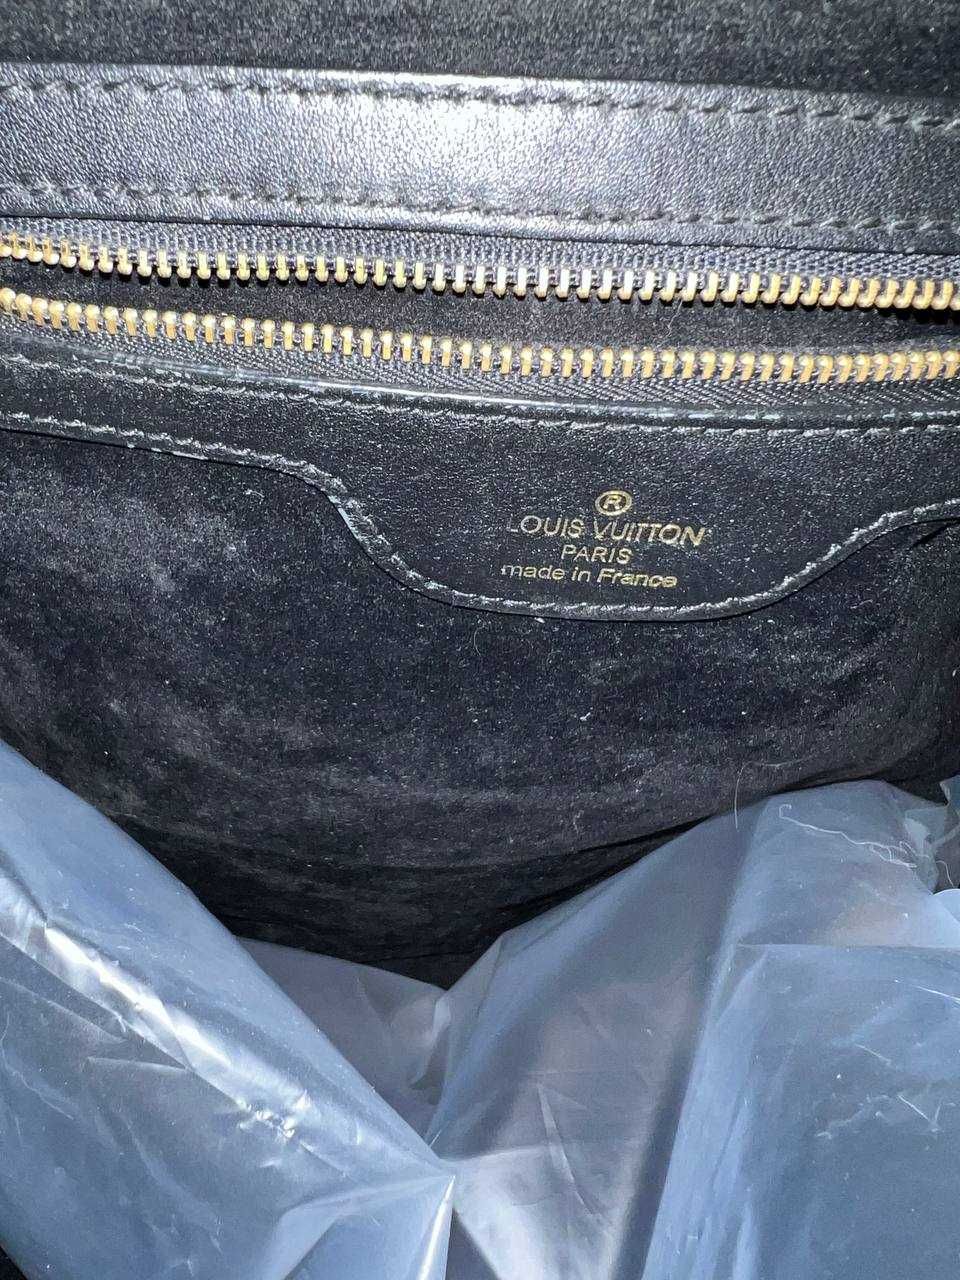 Продам кожаную сумку Louis Vuitton б/у